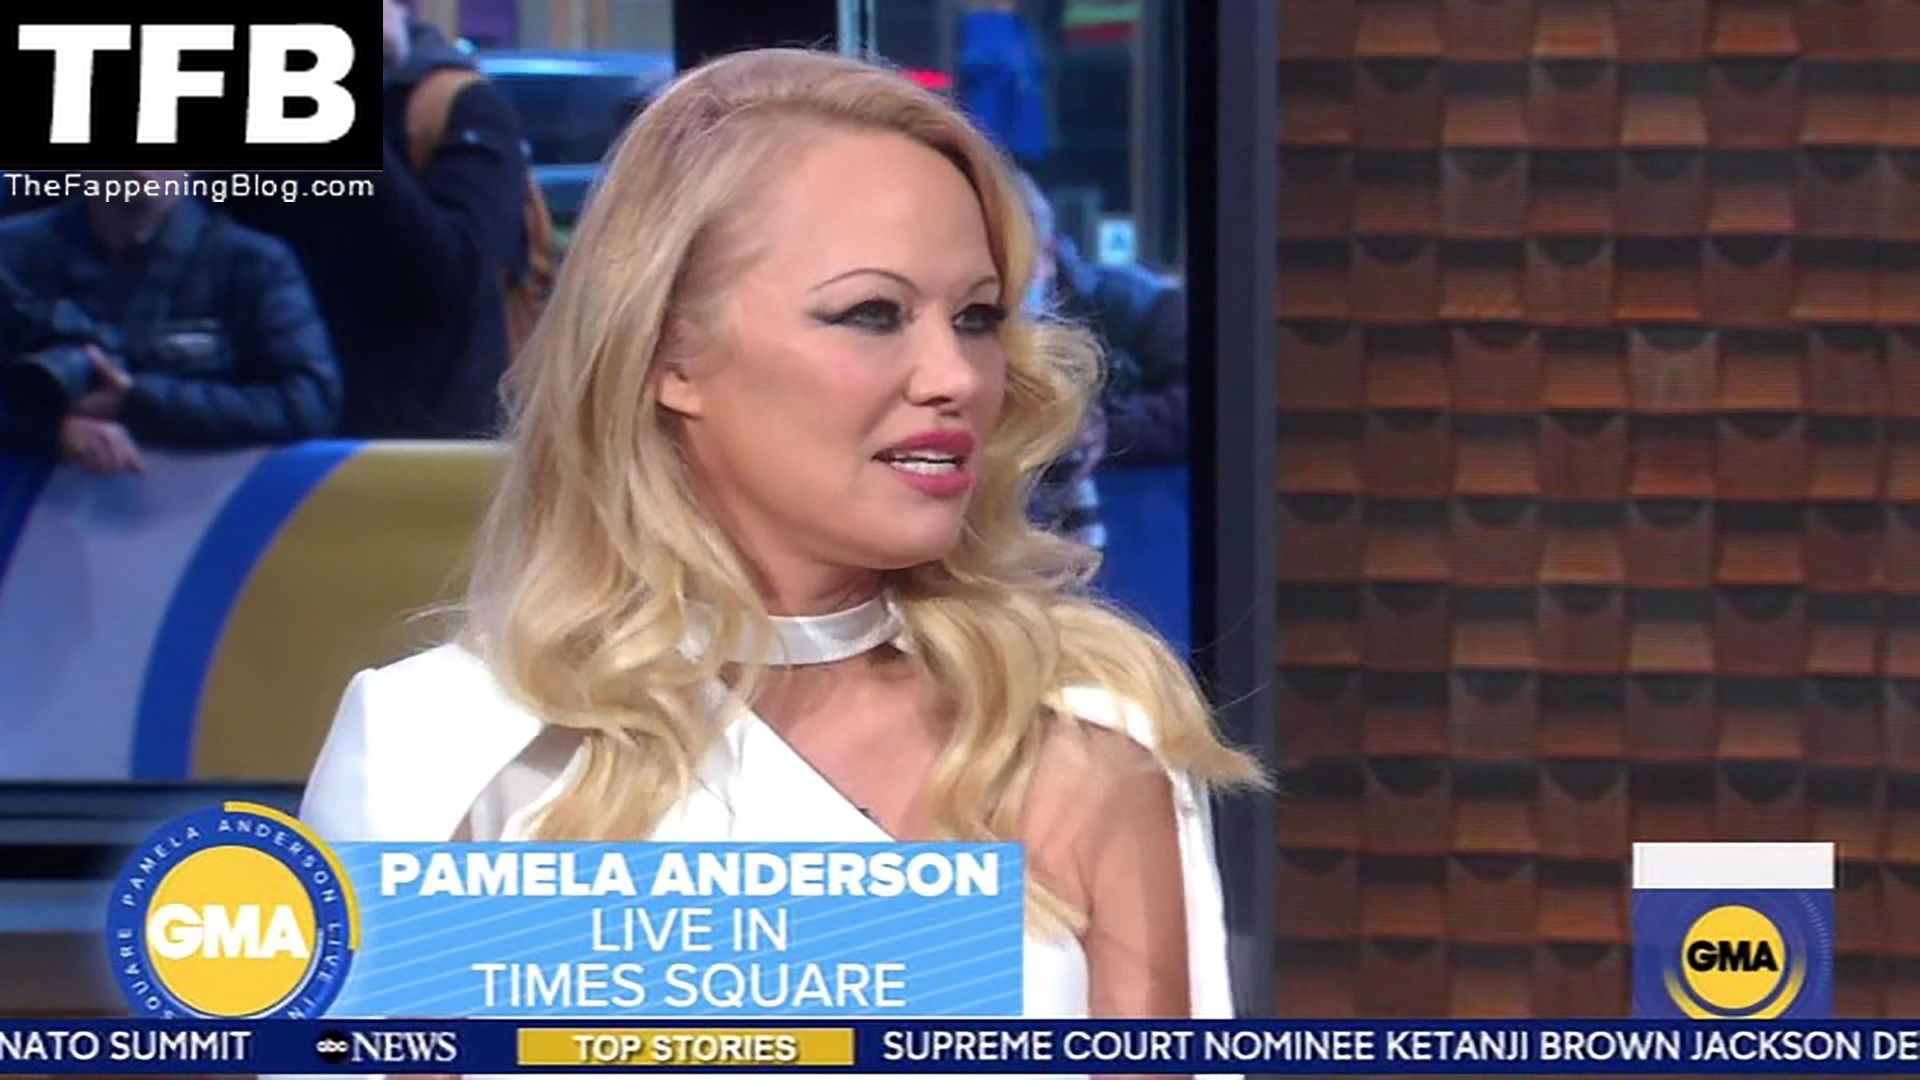 Pamela-Anderson-Hot-The-Fappening-Blog-19.jpg